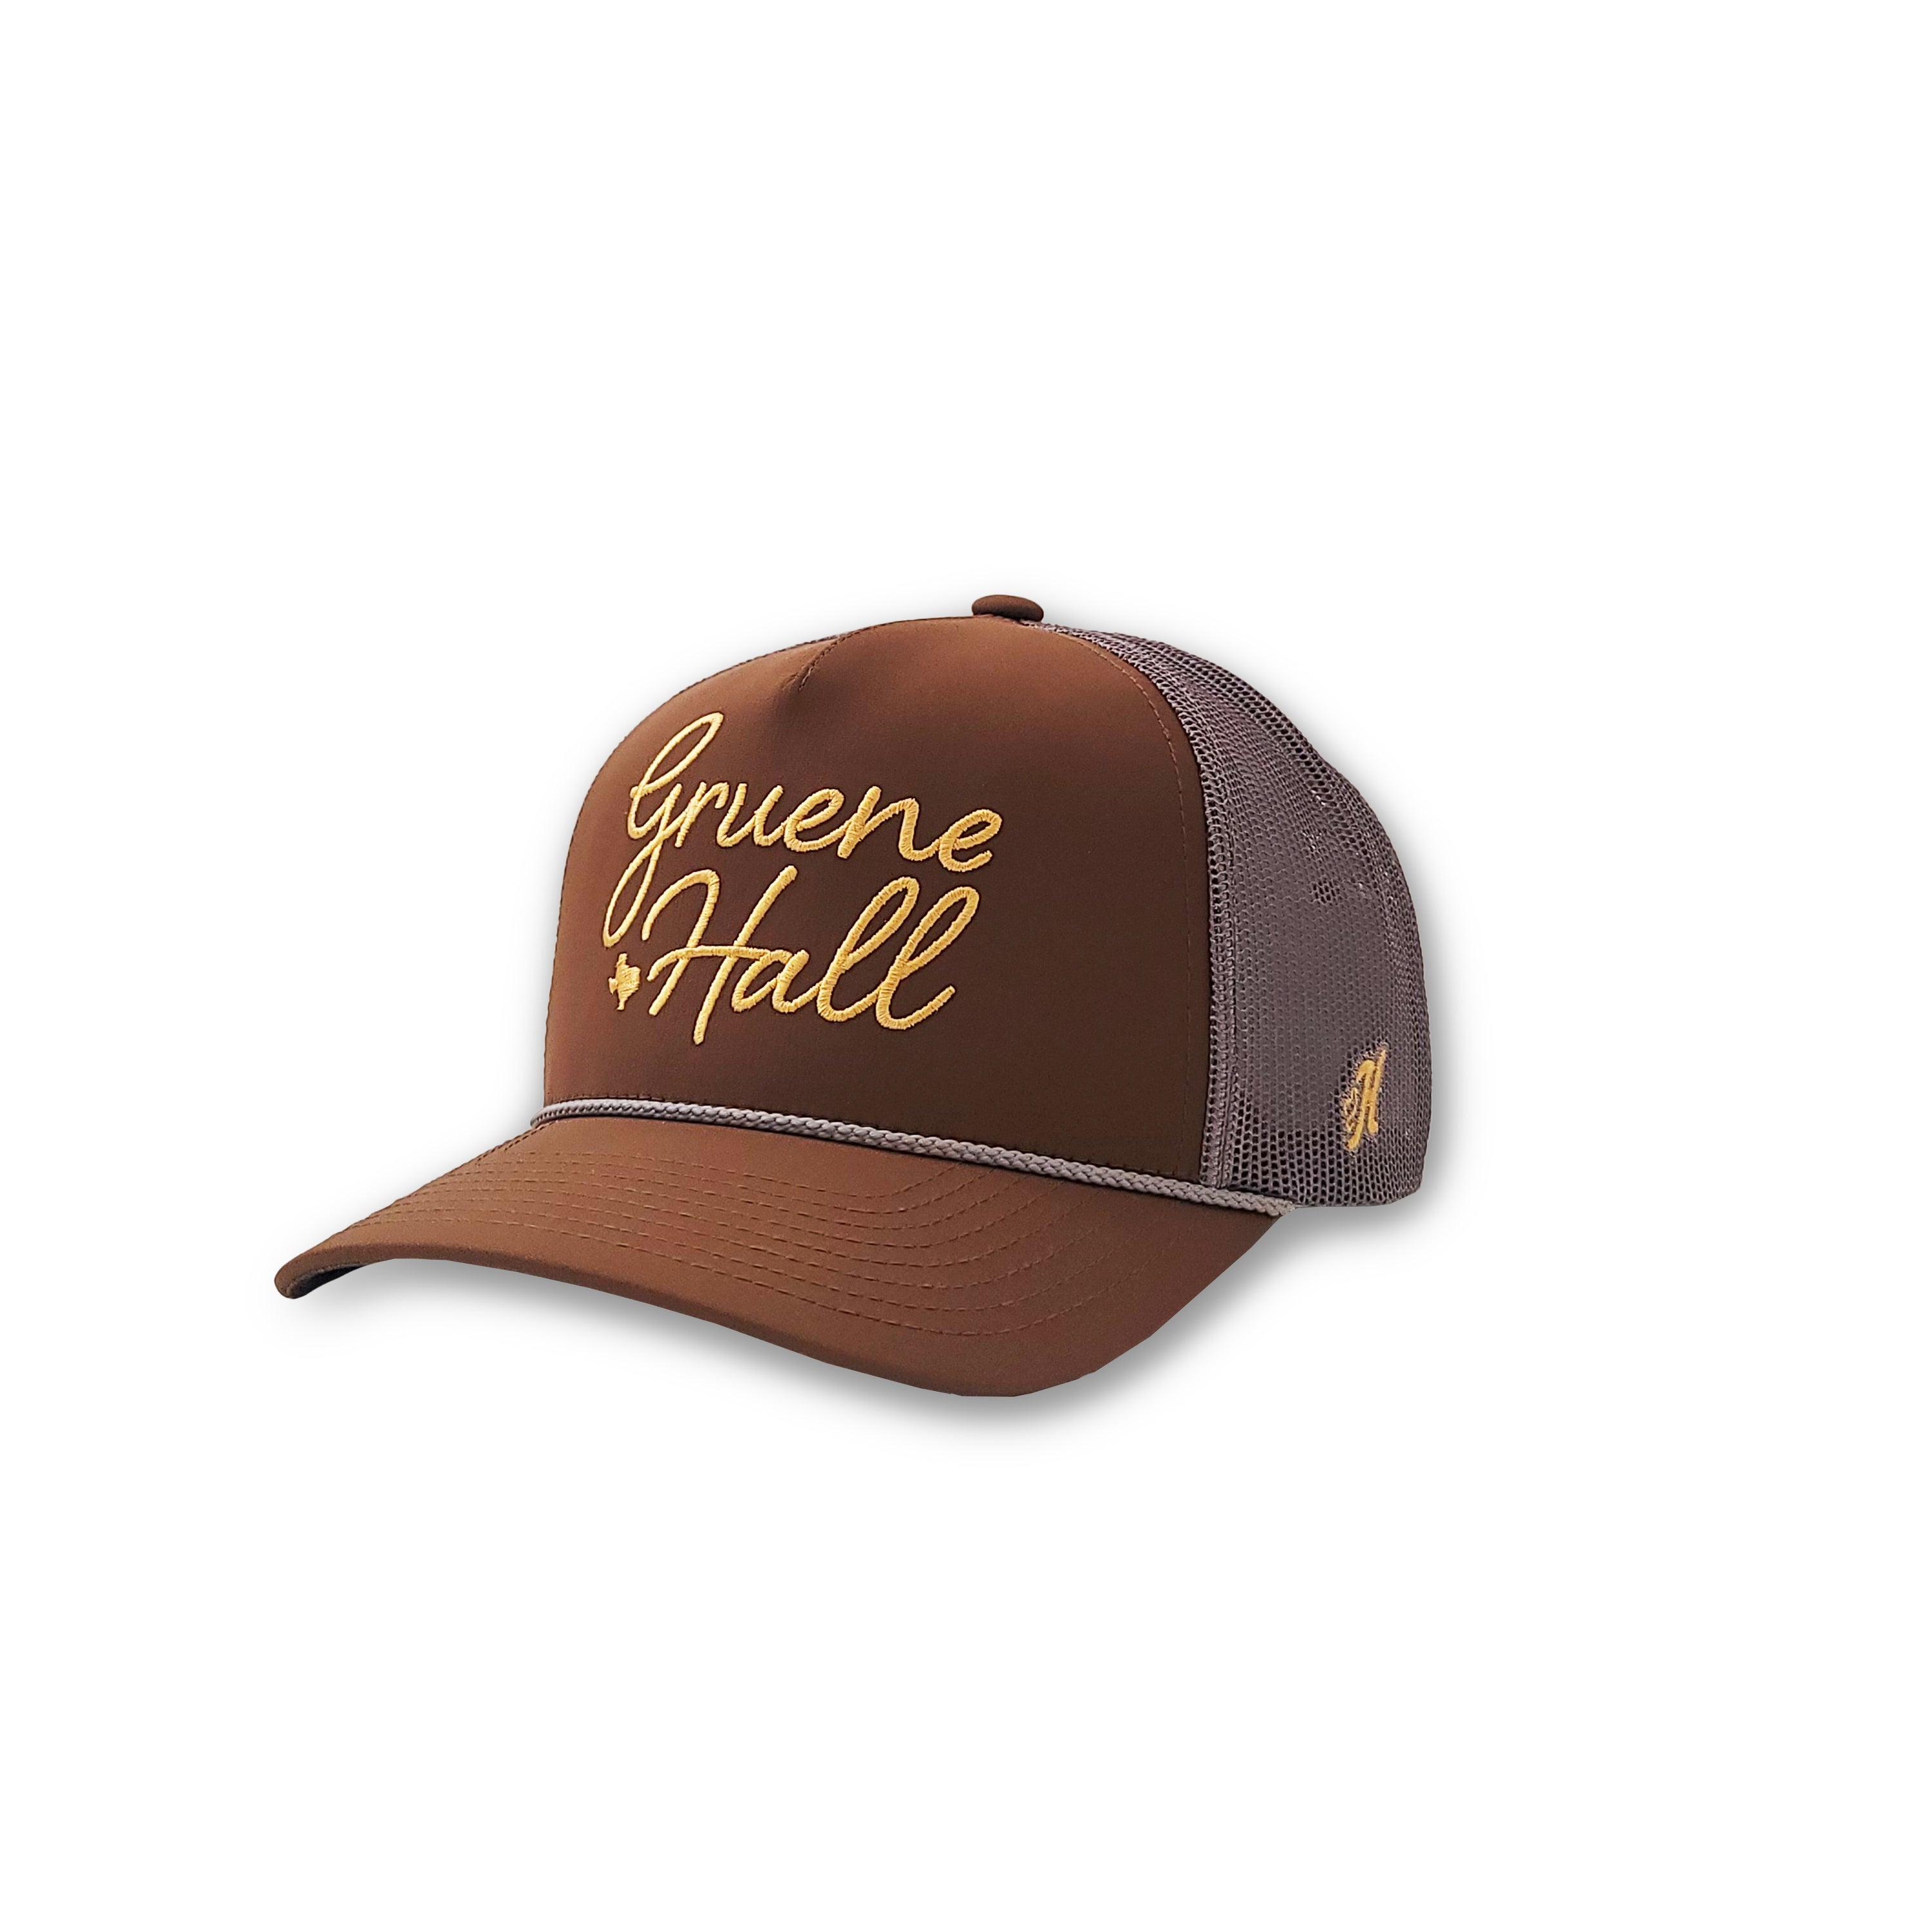 Hooey Gruene Hall hat